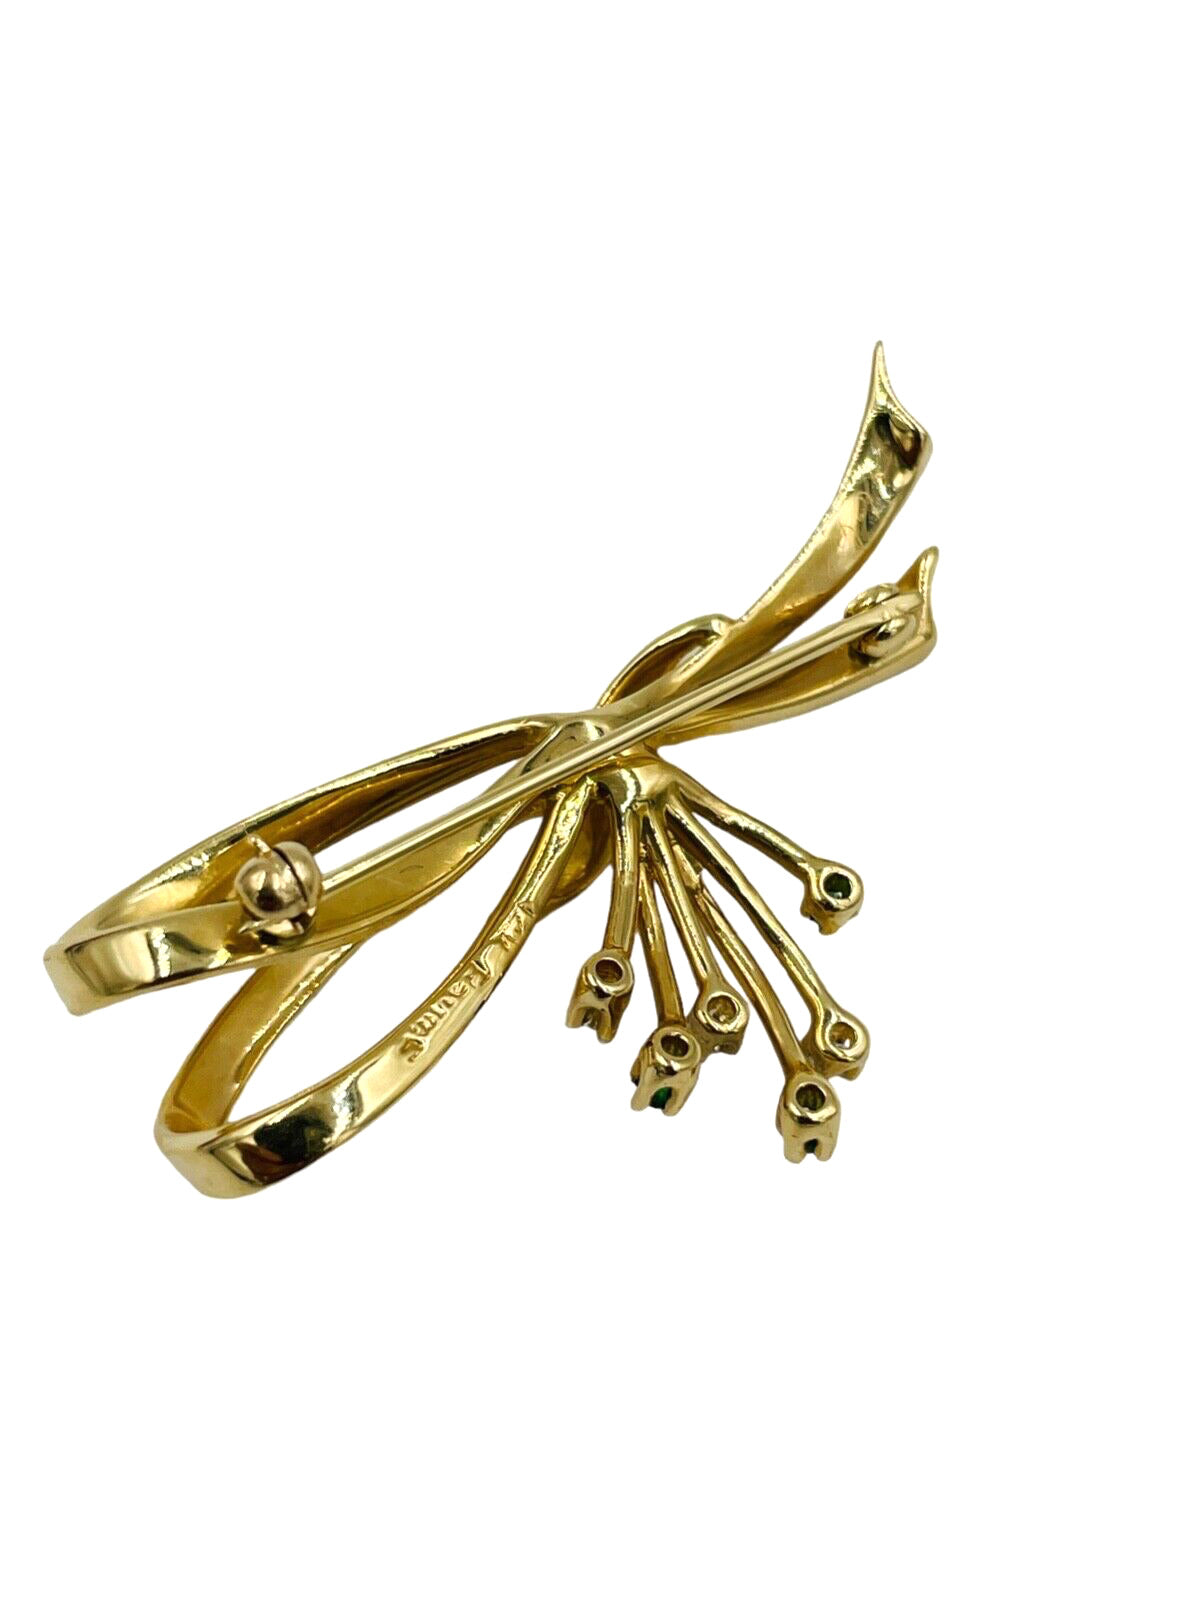 Baumstein Feder  14k yellow Gold Diamond Emerald Bow Pin Brooch